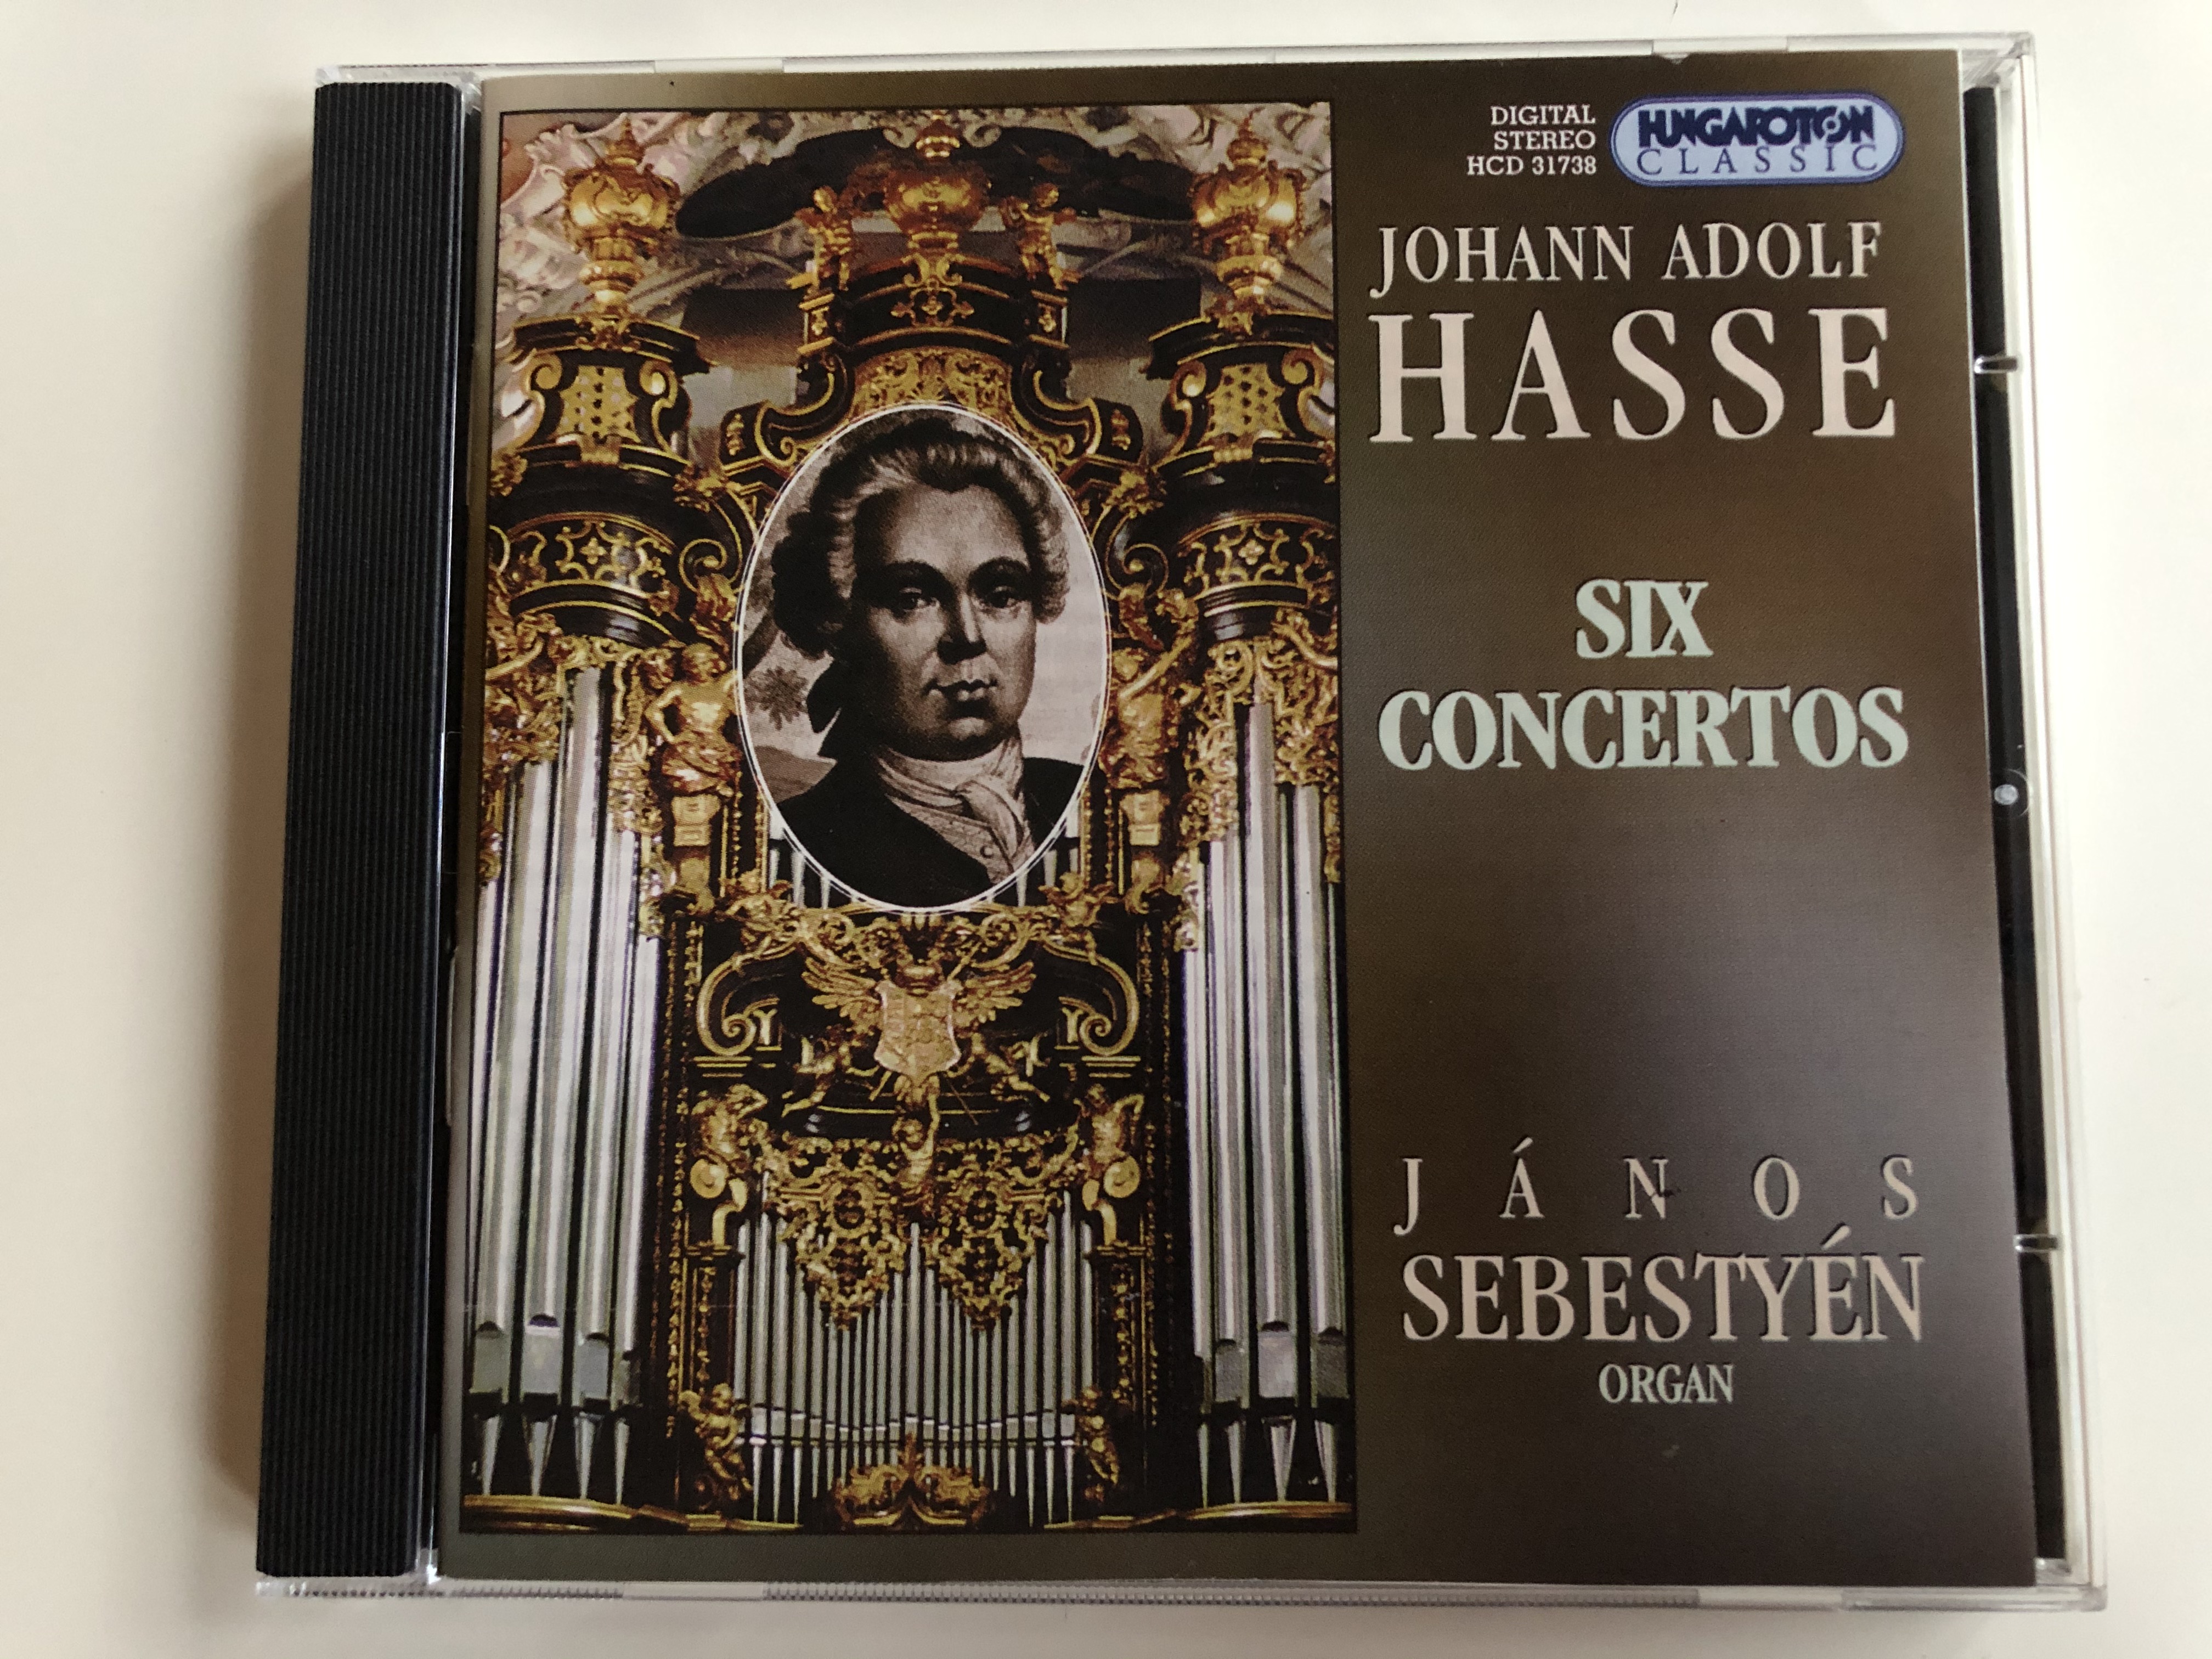 johann-adolf-hasse-six-concertos-j-nos-sebesty-n-organ-hungaroton-classic-audio-cd-1998-stereo-hcd-31738-1-.jpg